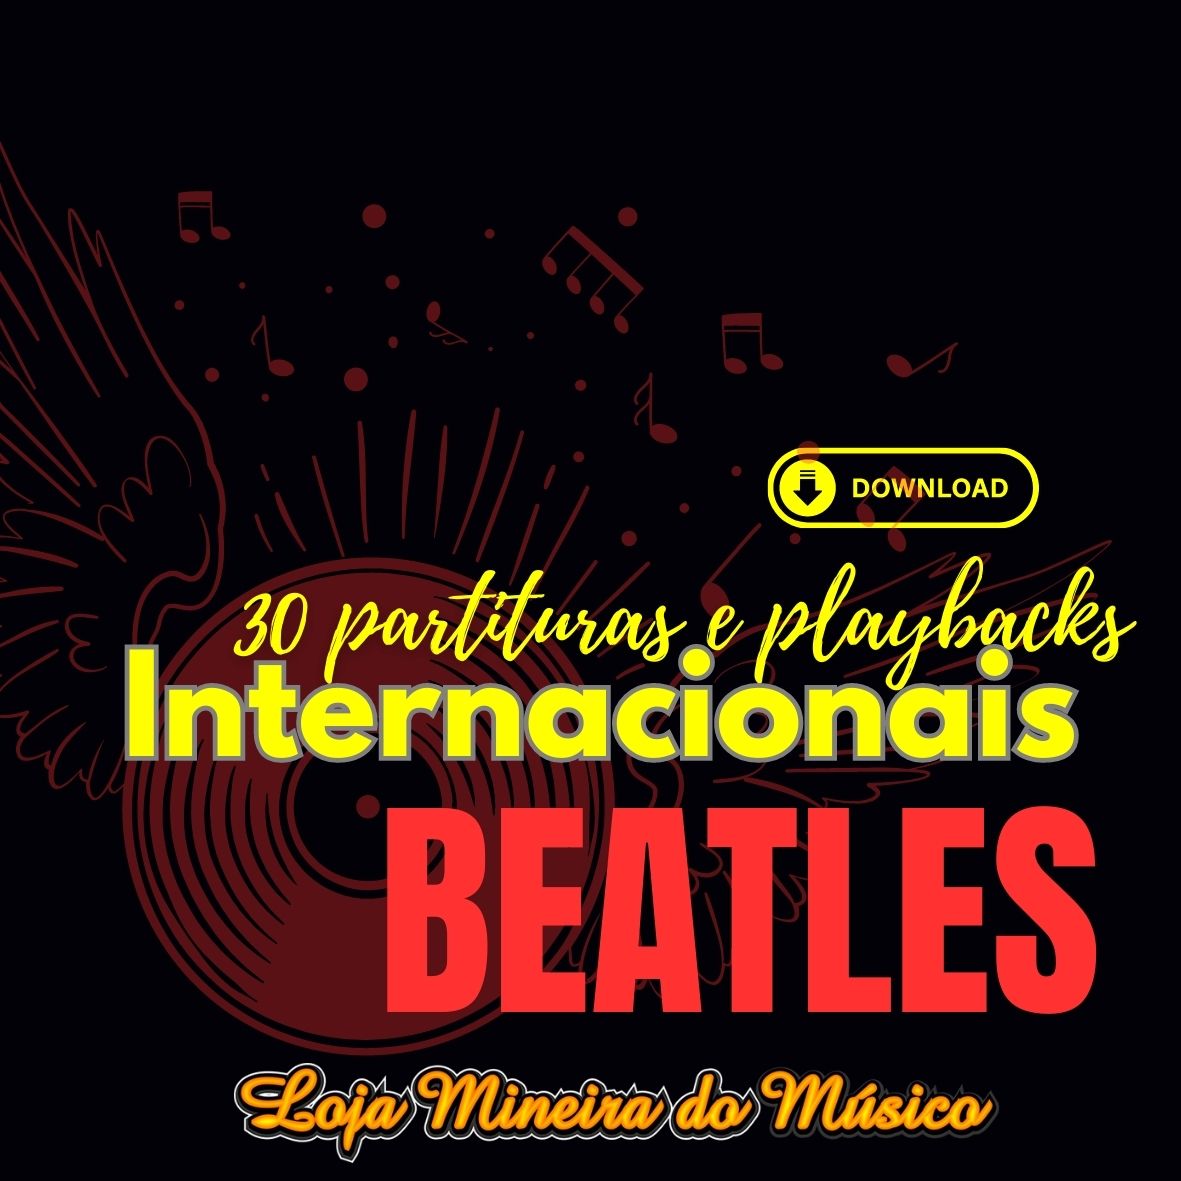 TROMPETE BEATLES Partituras e Playbacks MP3 e Midi - The Beatles PDF - MIMO MUSICAL